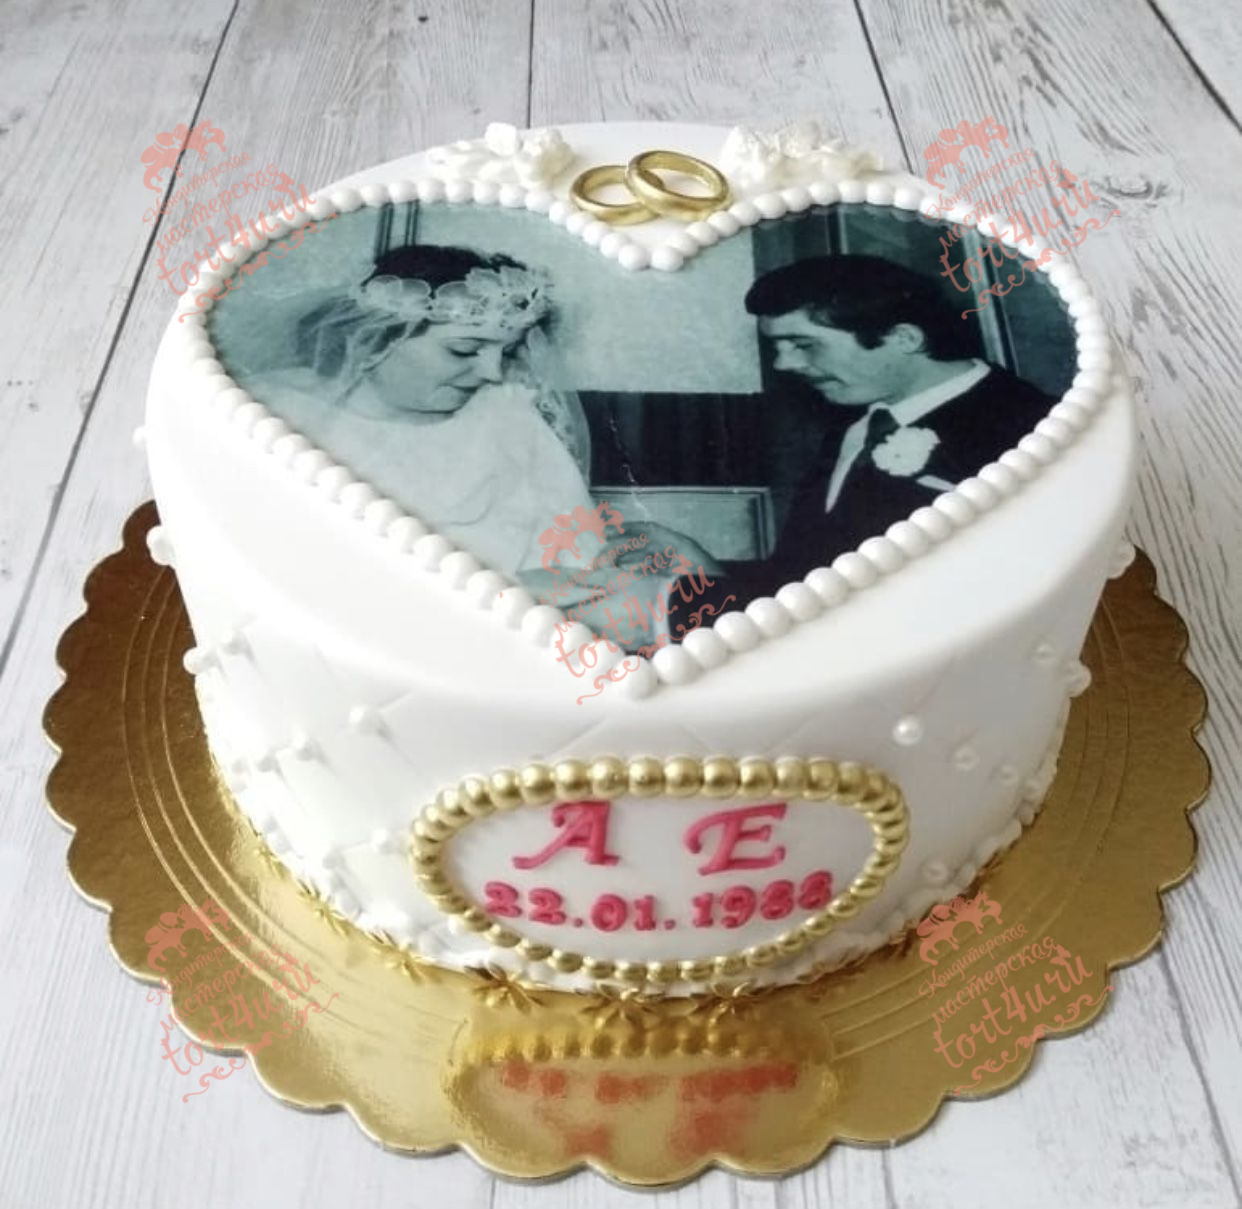 торт на 30 лет свадьбы родителям фото